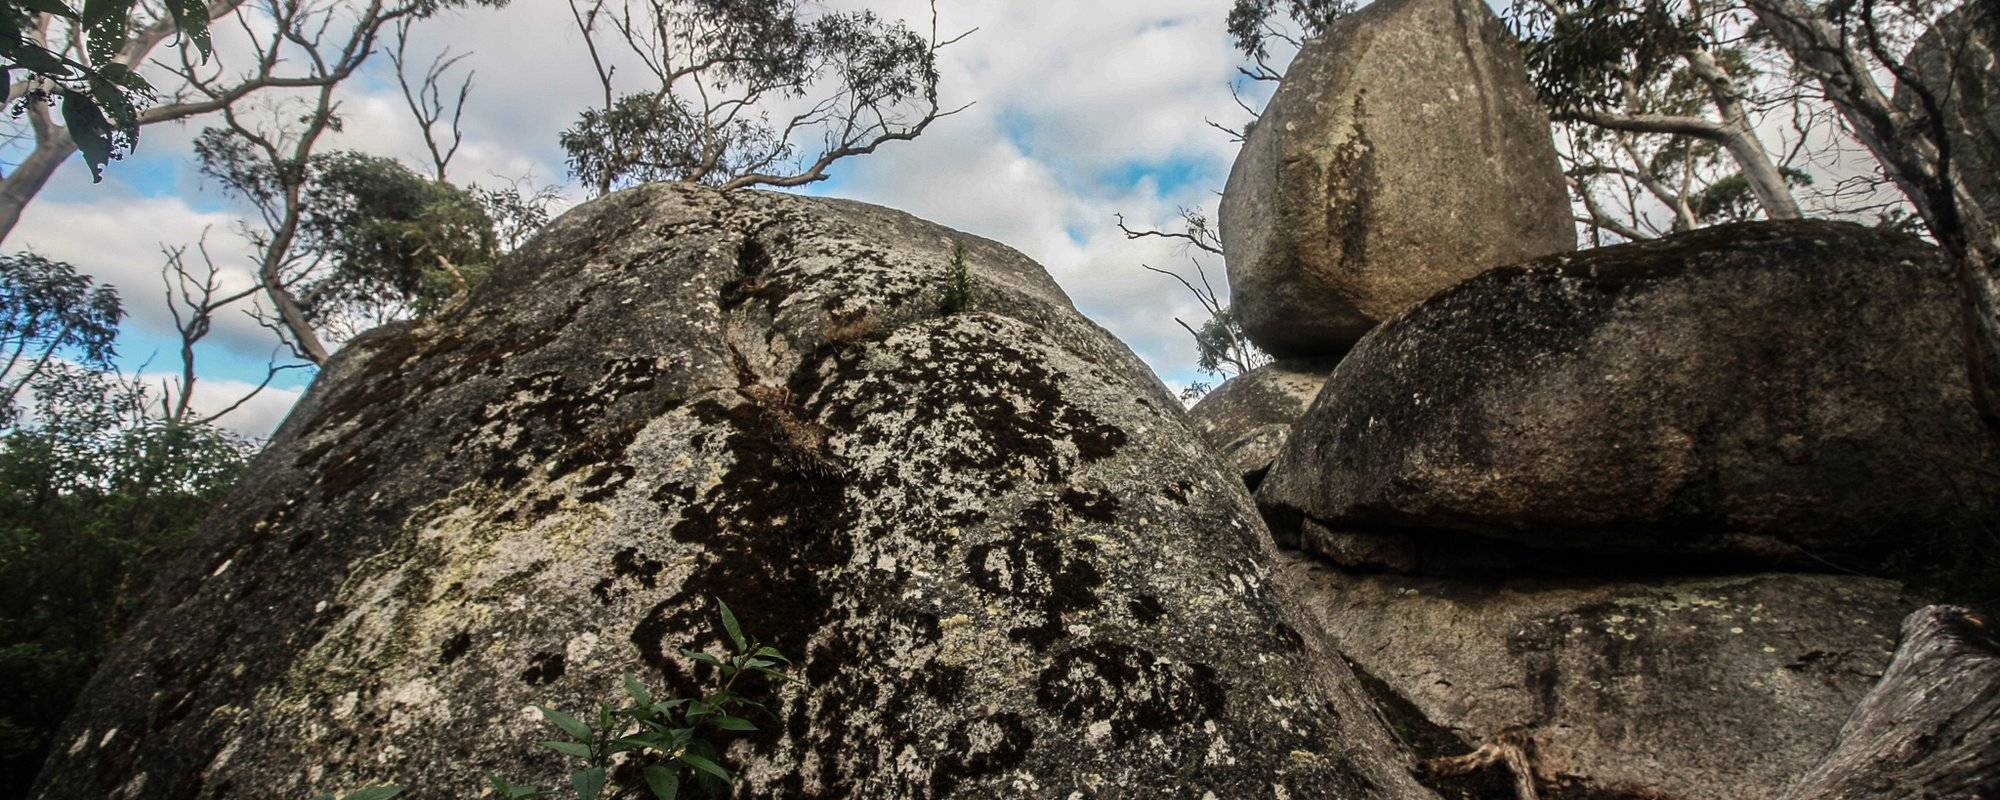 The Giant Balancing Rocks of the Porongurups!